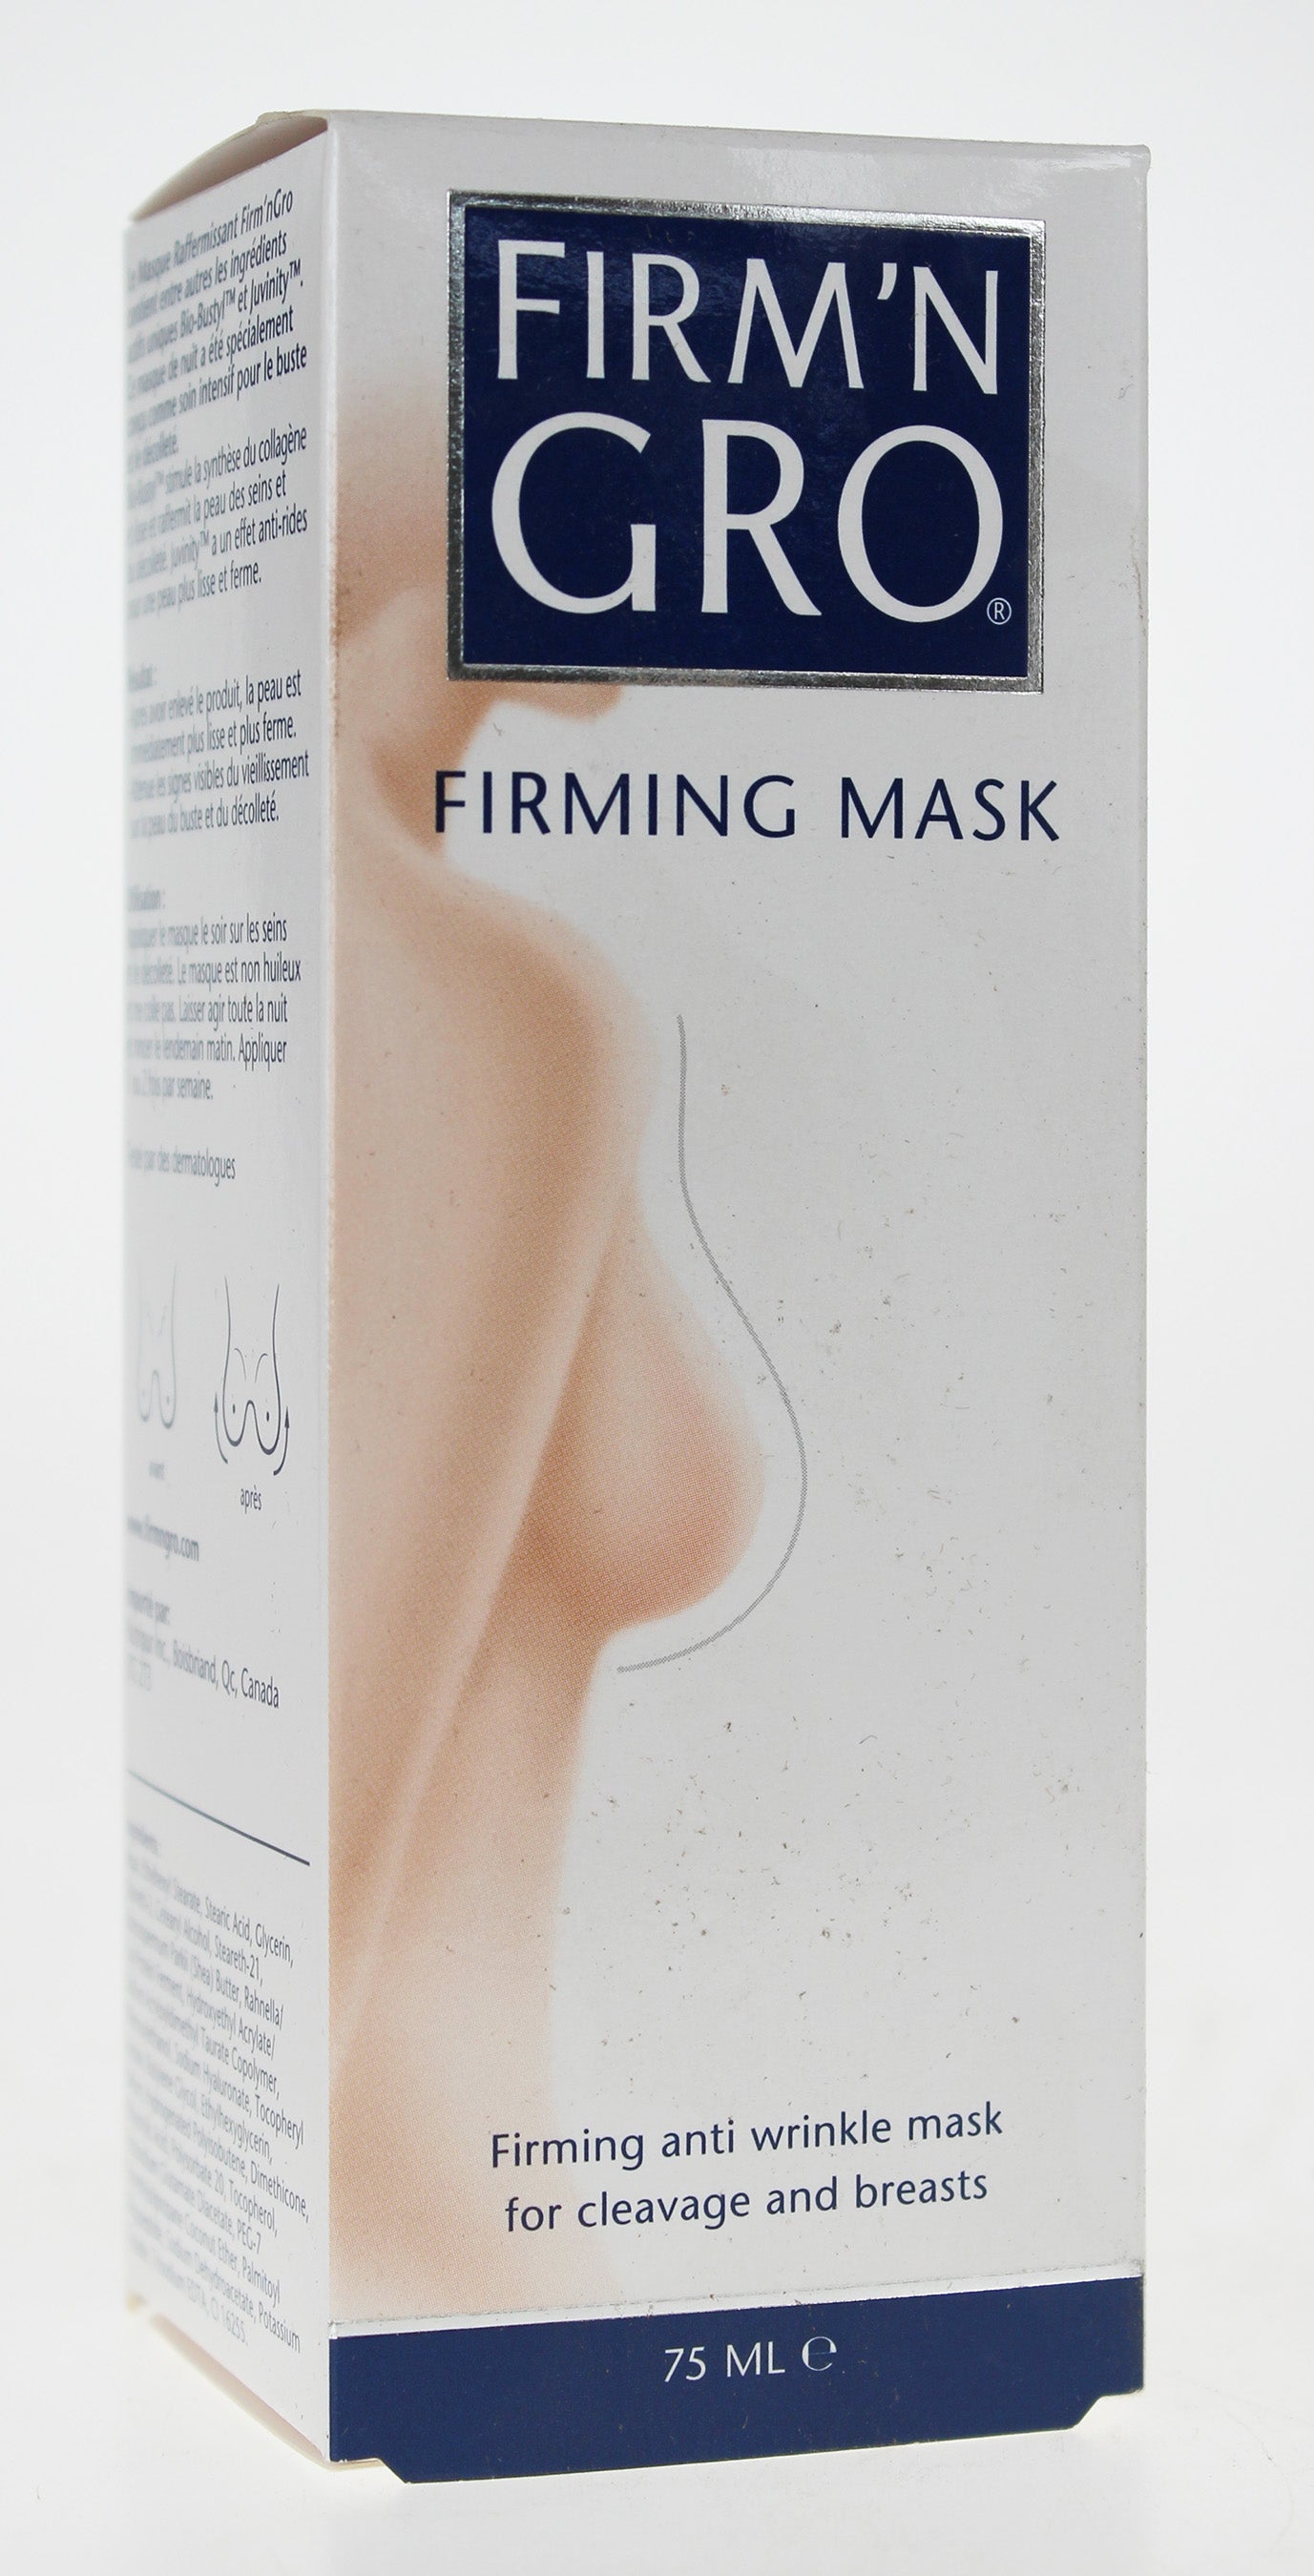 FirmNGro Firming Mask